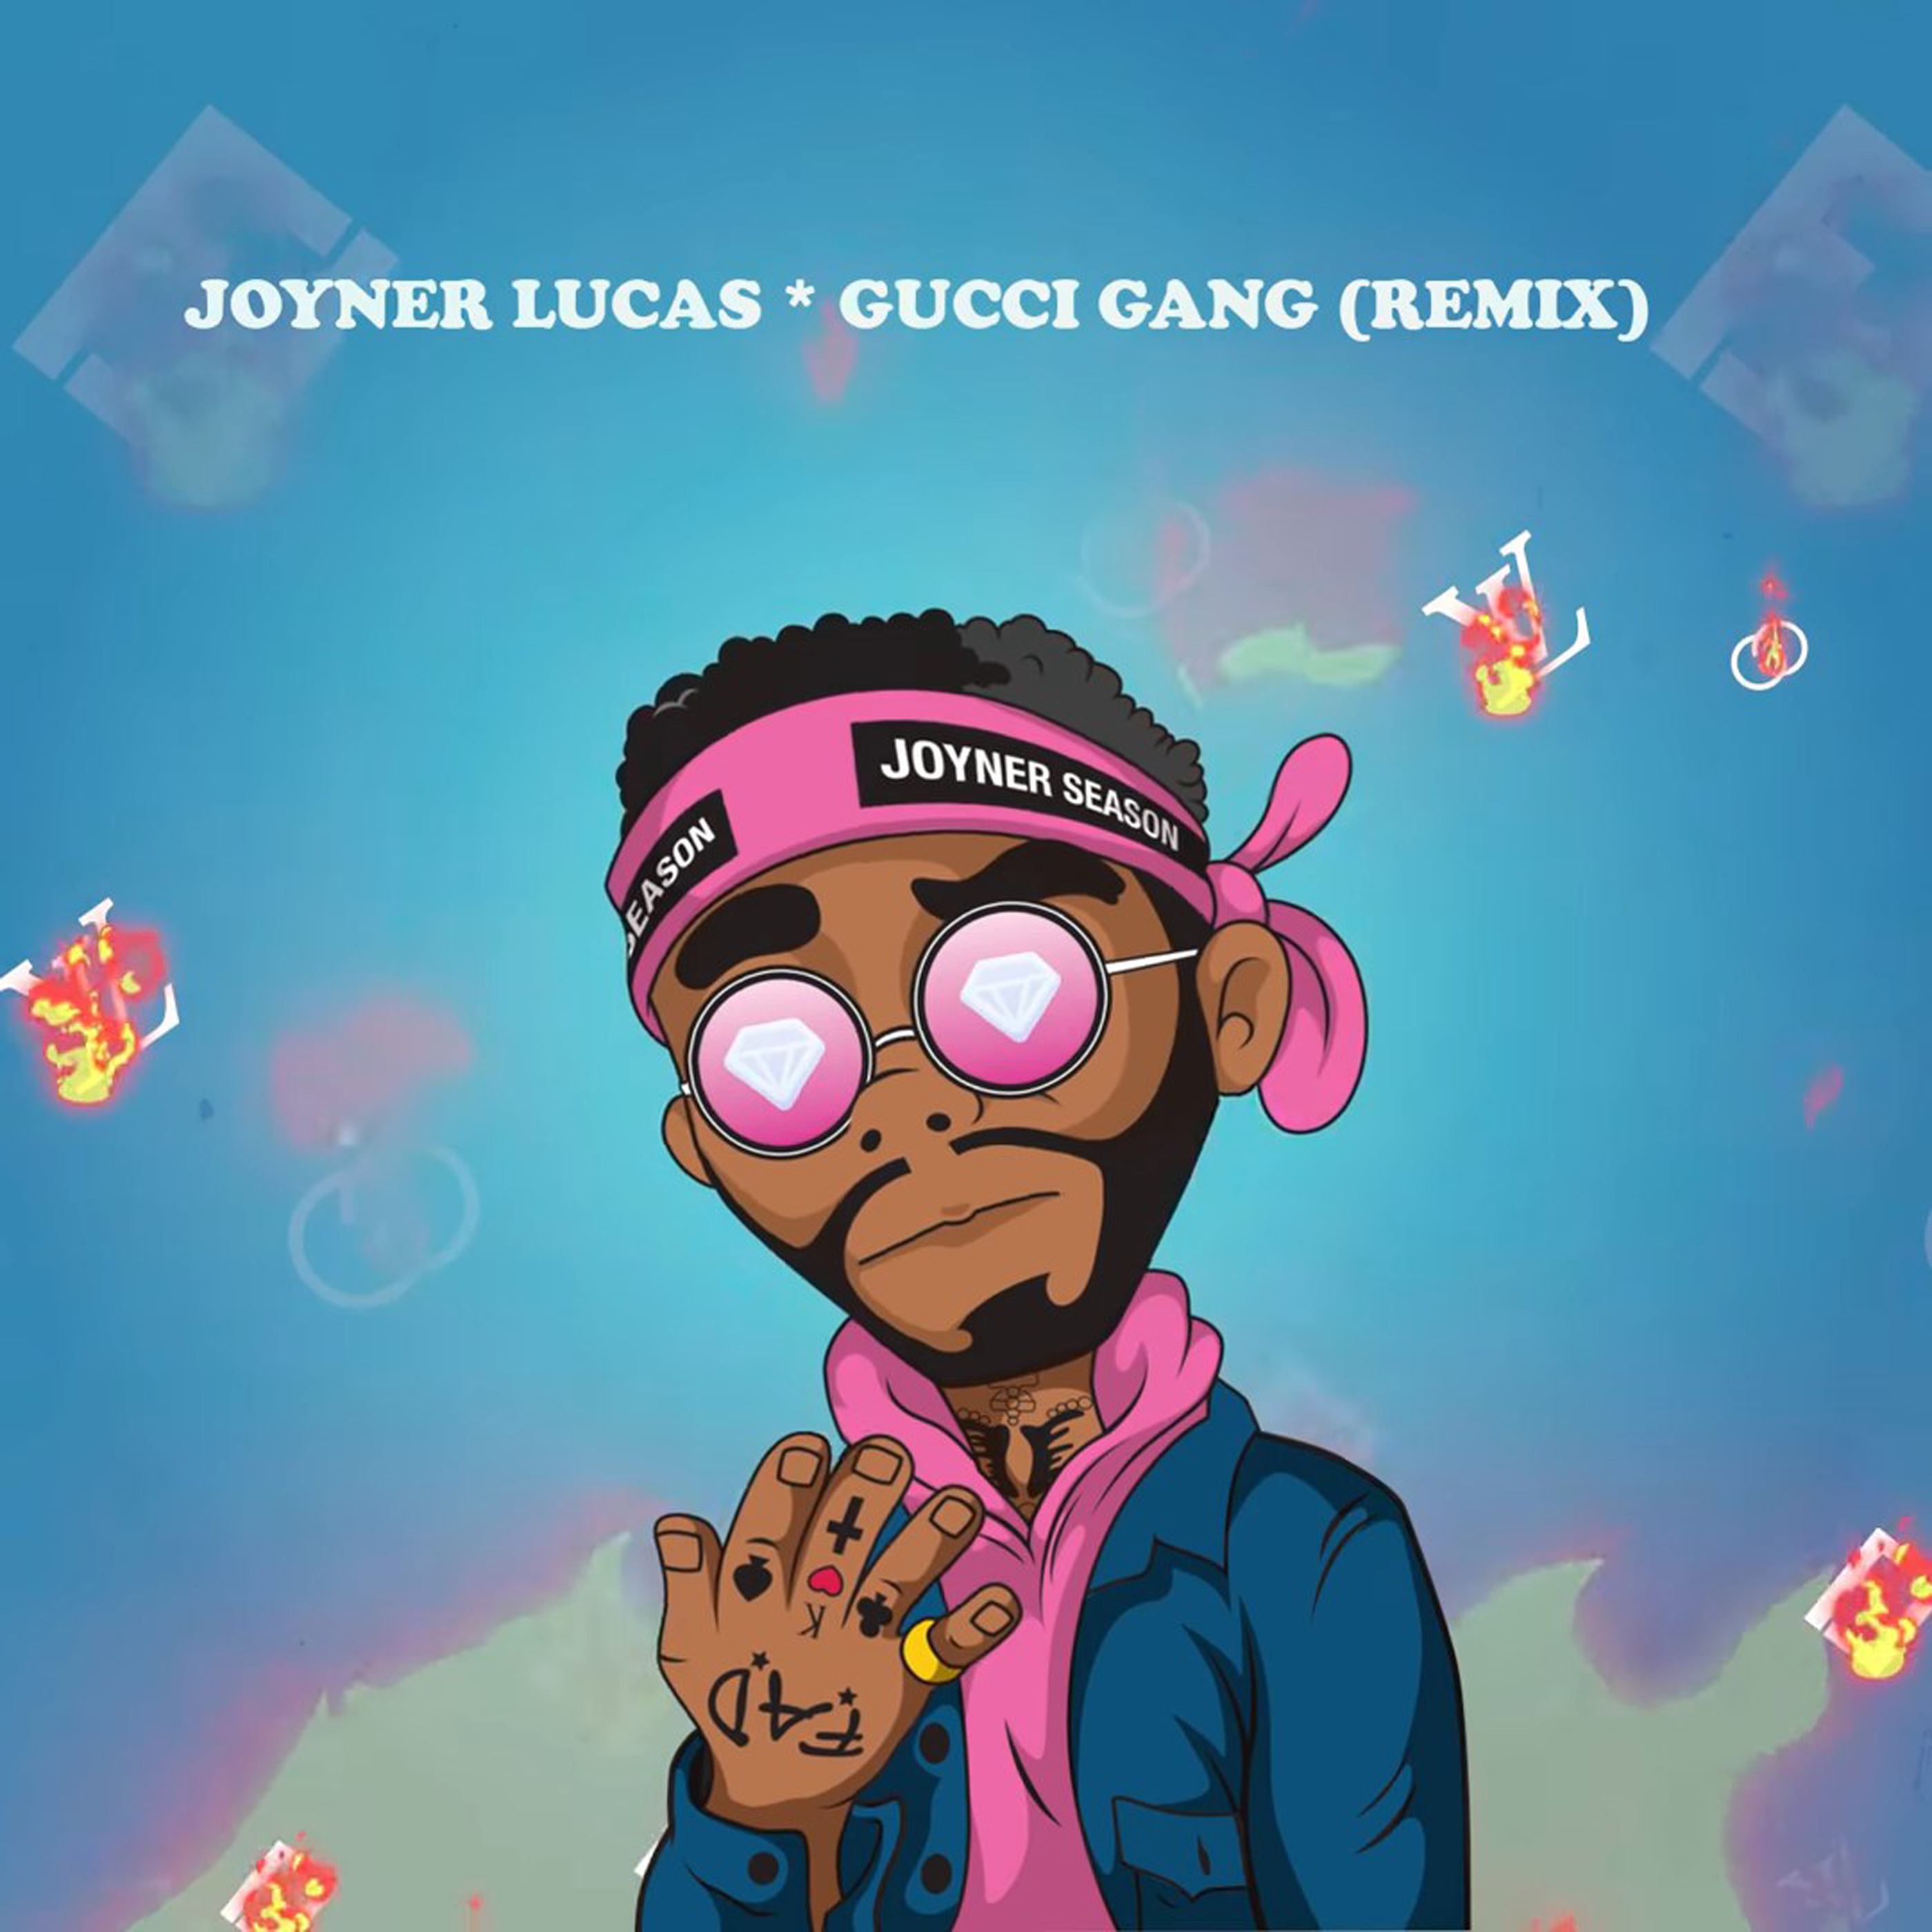 Gucci Gang - Cover Art on Behance